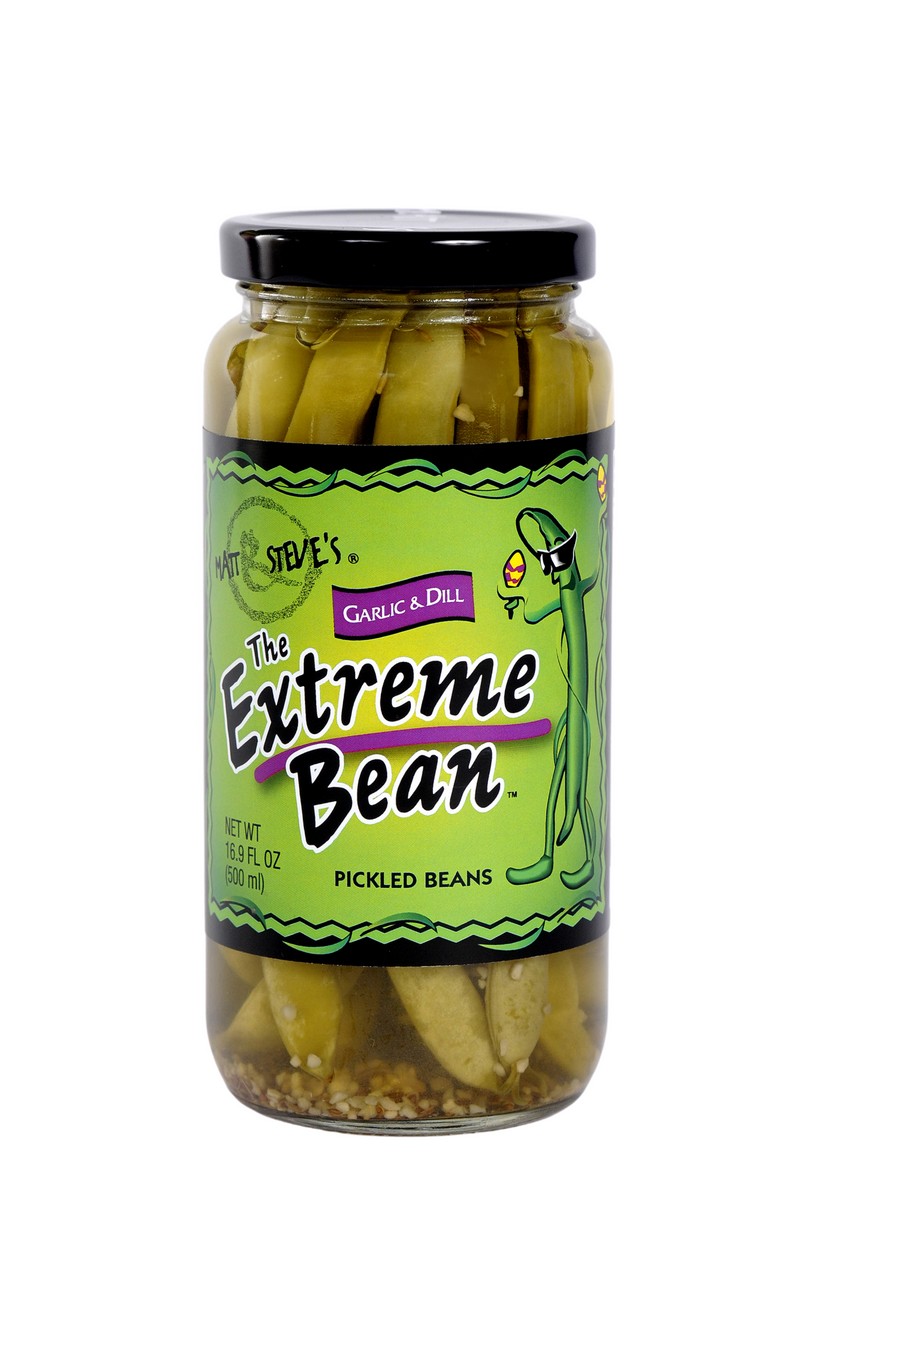 The Extreme Bean - Garlic & Dill 16.9 oz (3 pack)